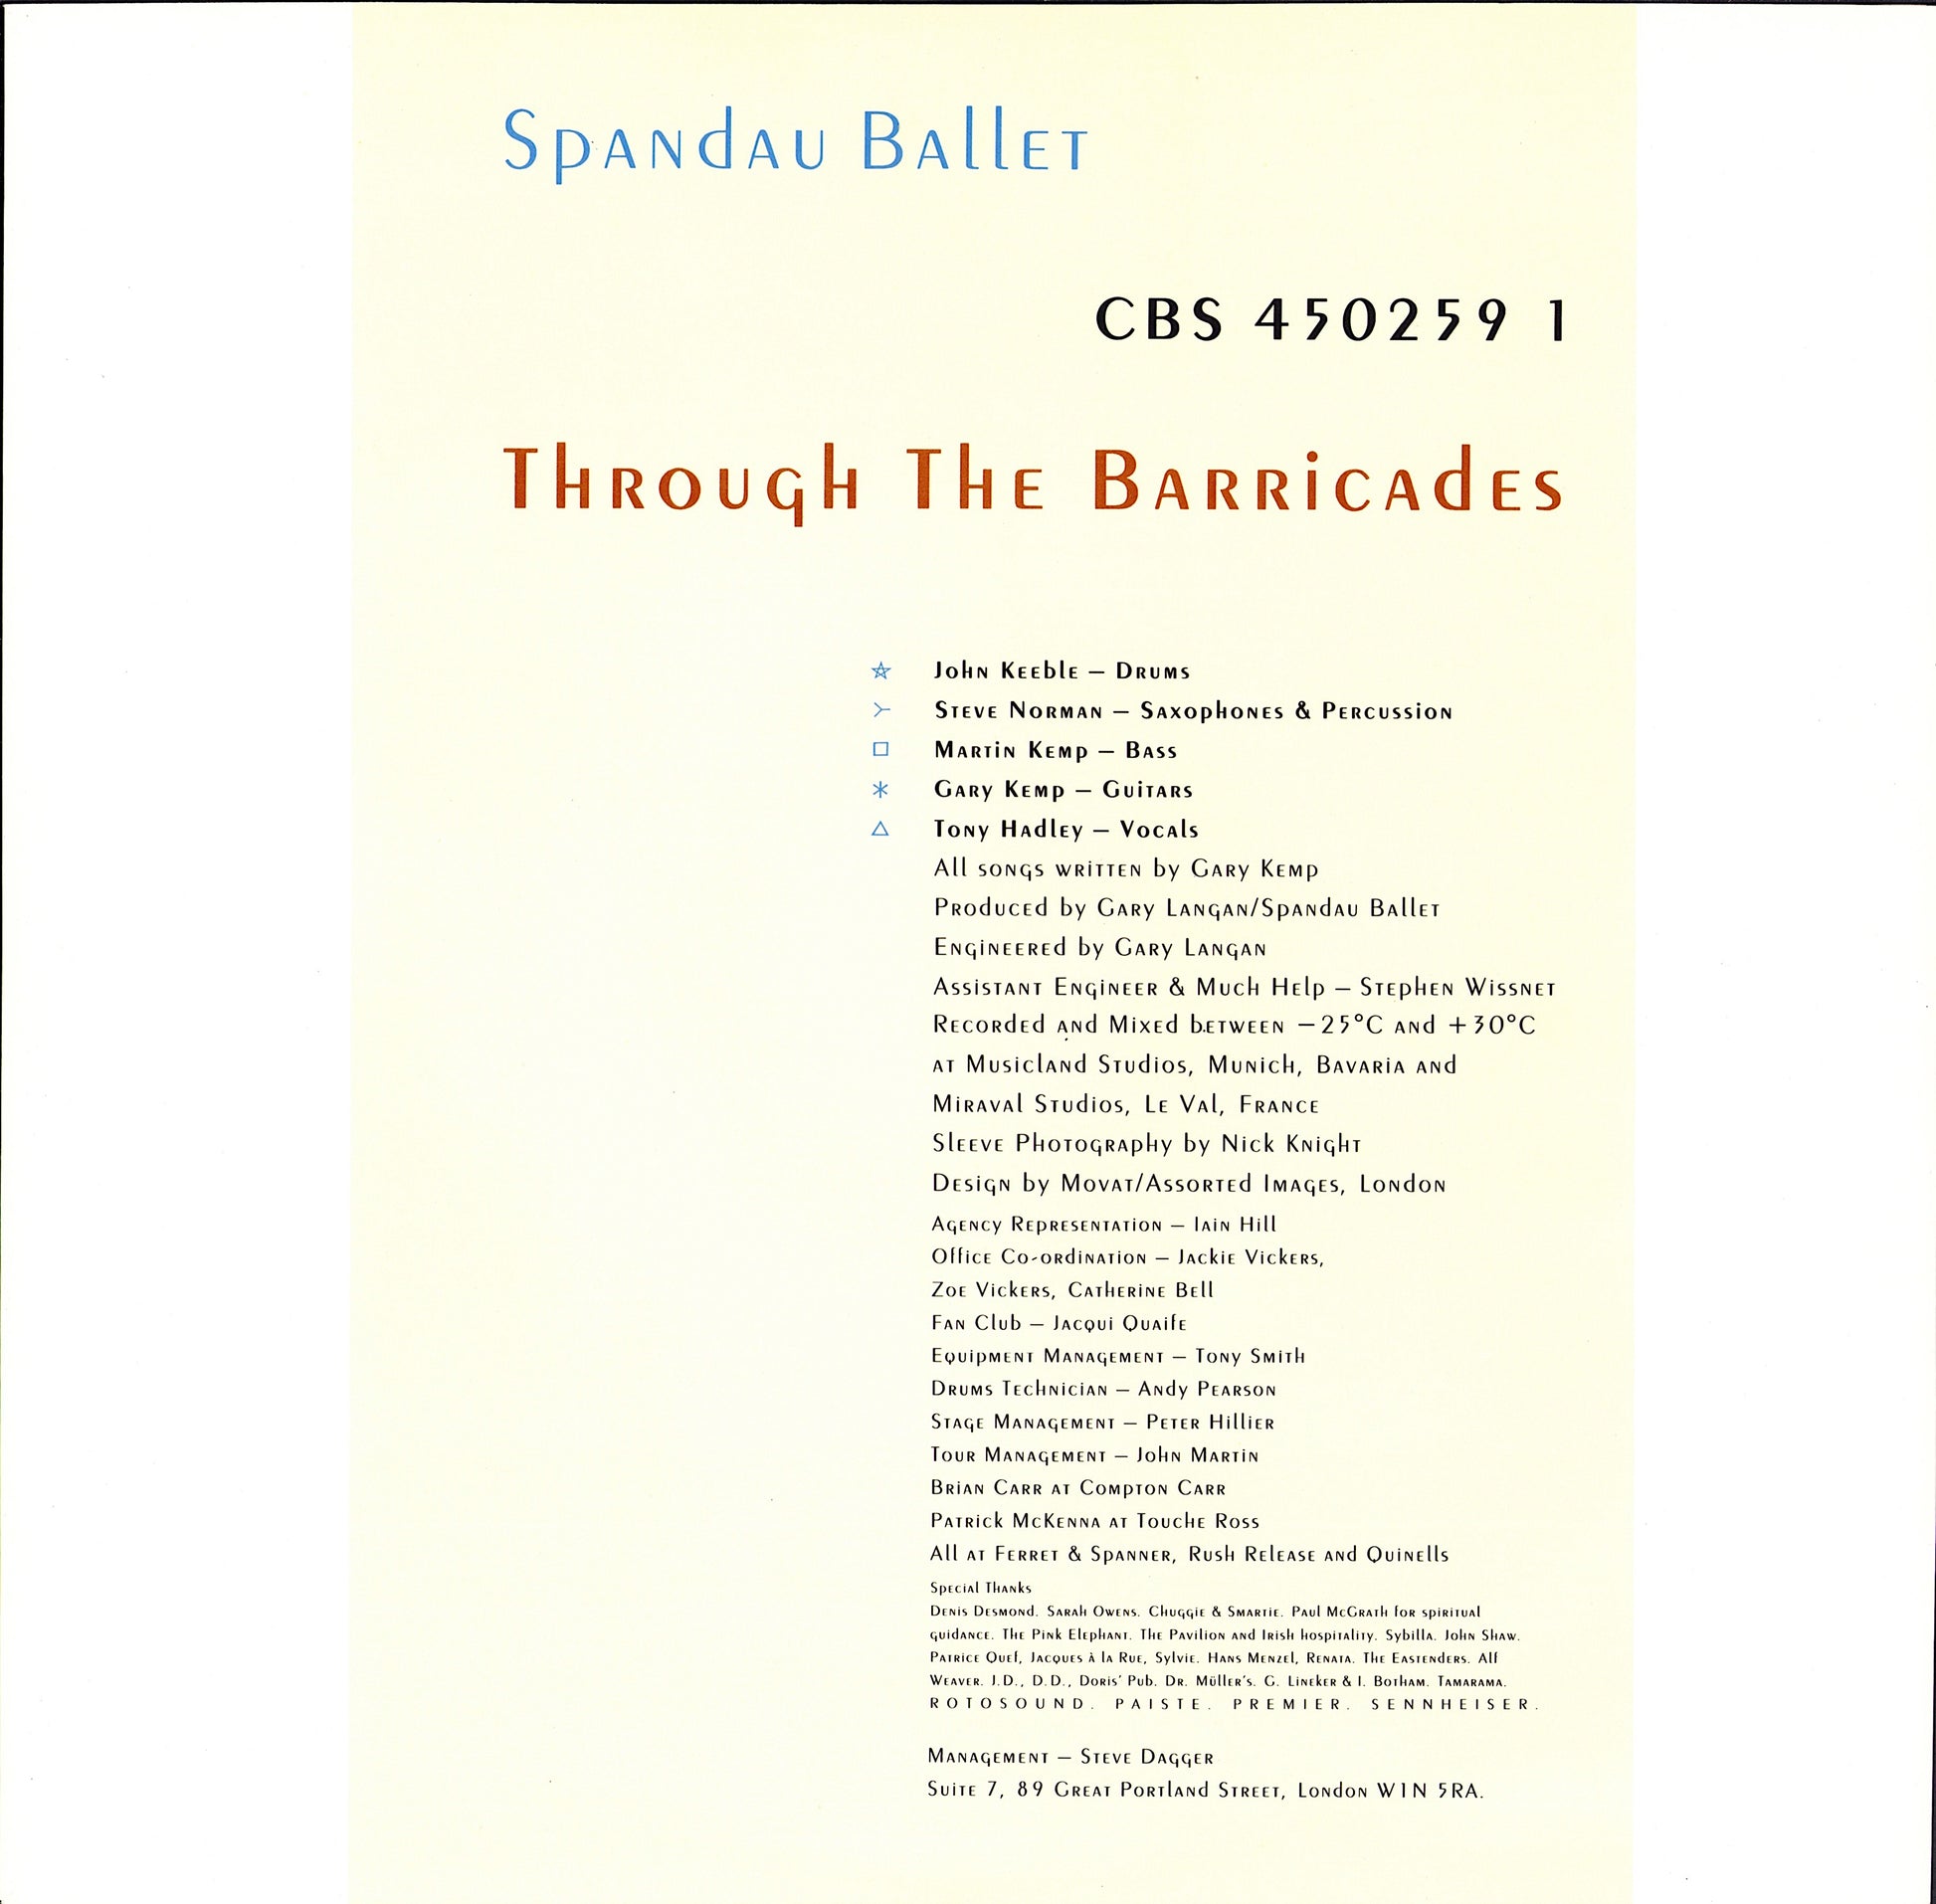 Spandau Ballet - Through The Barricades Vinyl LP